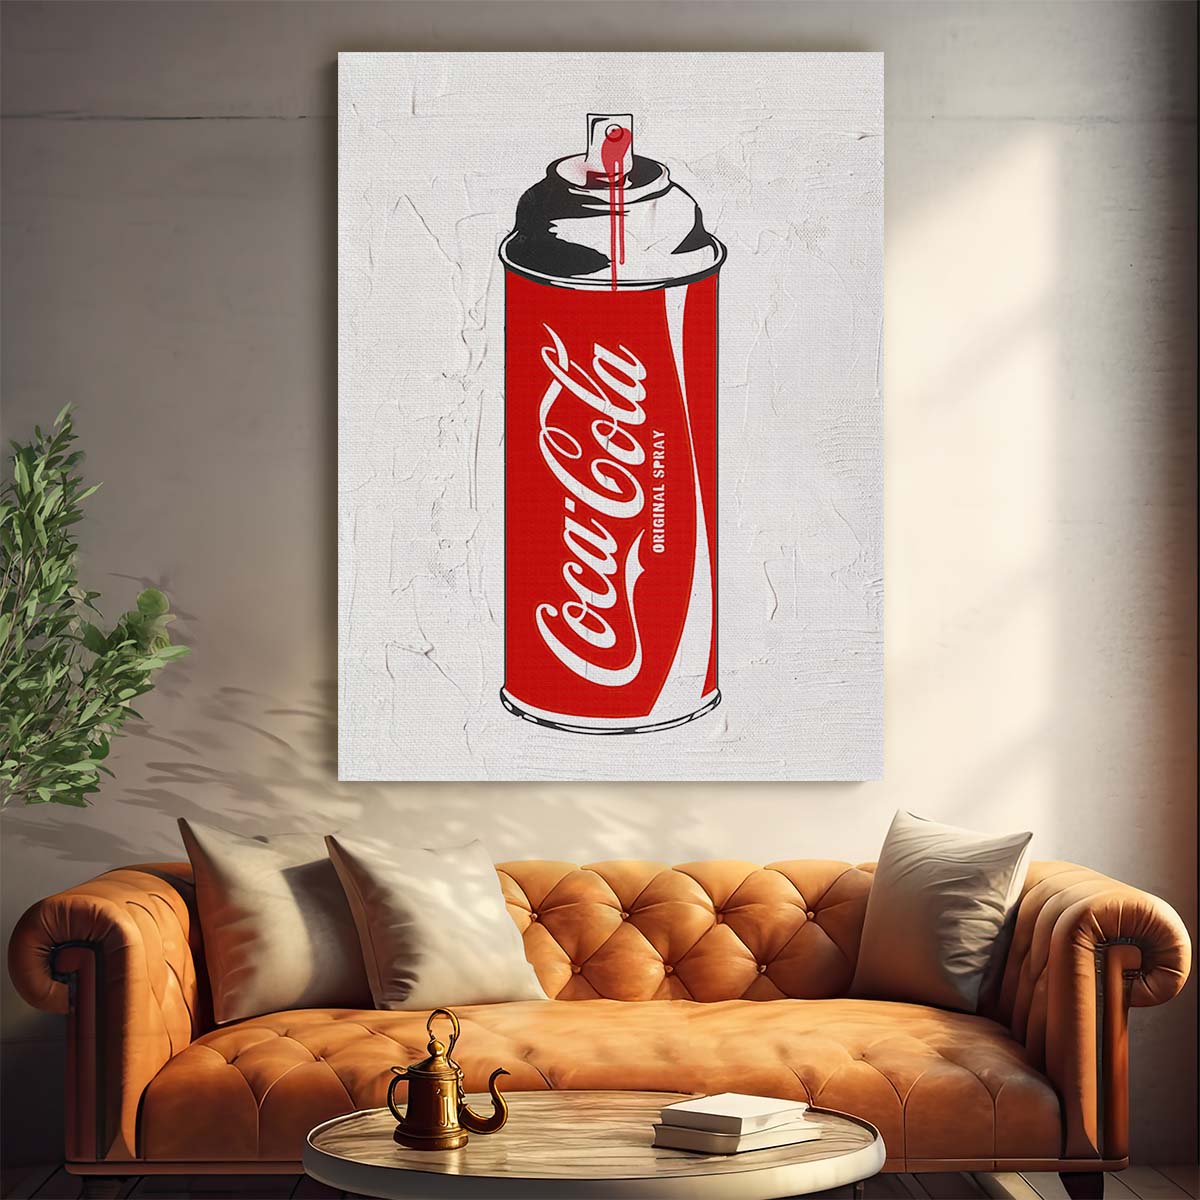 Coca Cola Original Spray Wall Art by Luxuriance Designs. Made in USA.